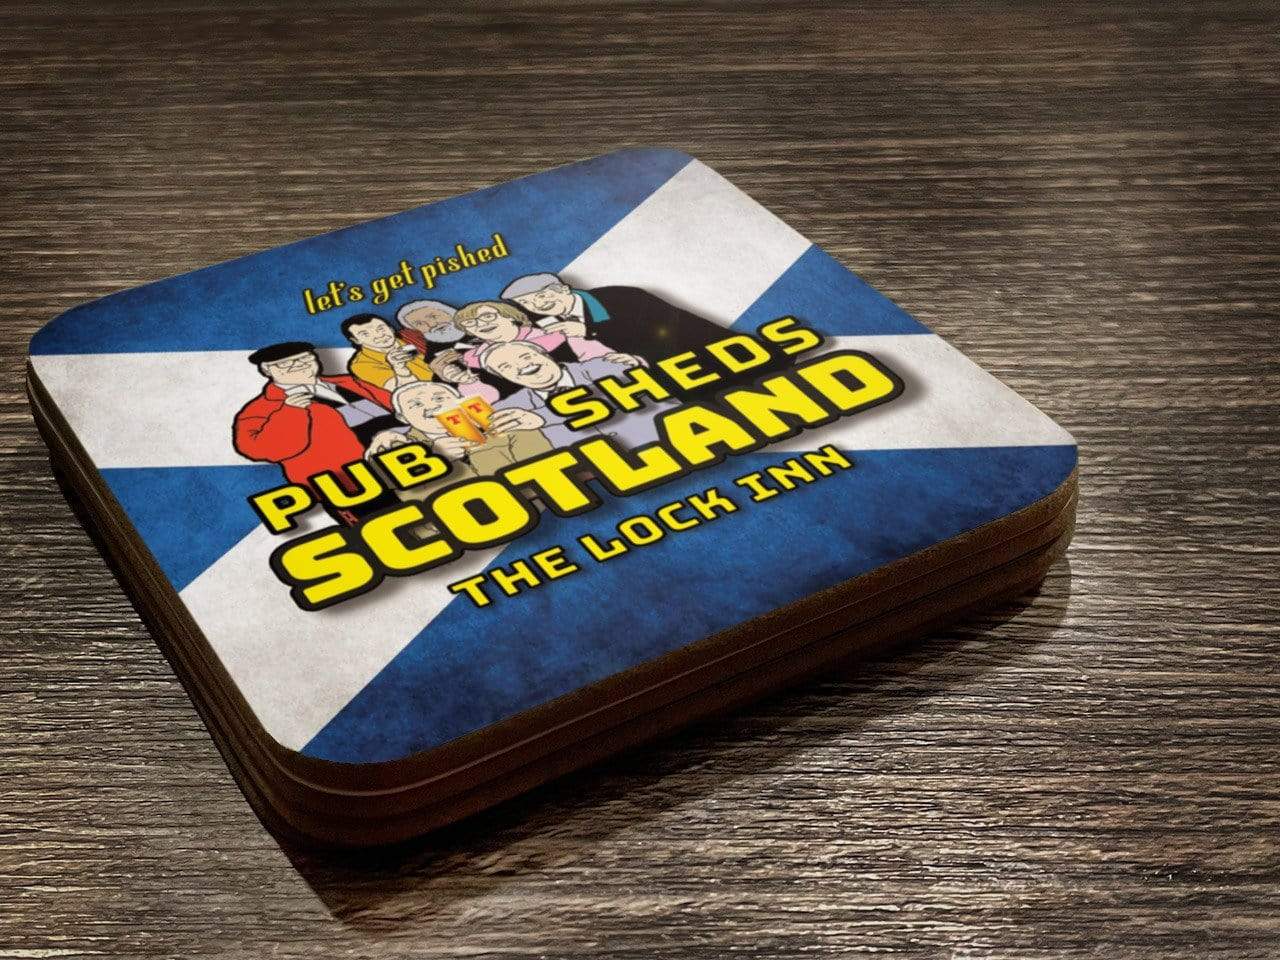 Pub Sheds Scotland Coasters (set of 4) Raise the Bar Print and Design - Raise the Bar